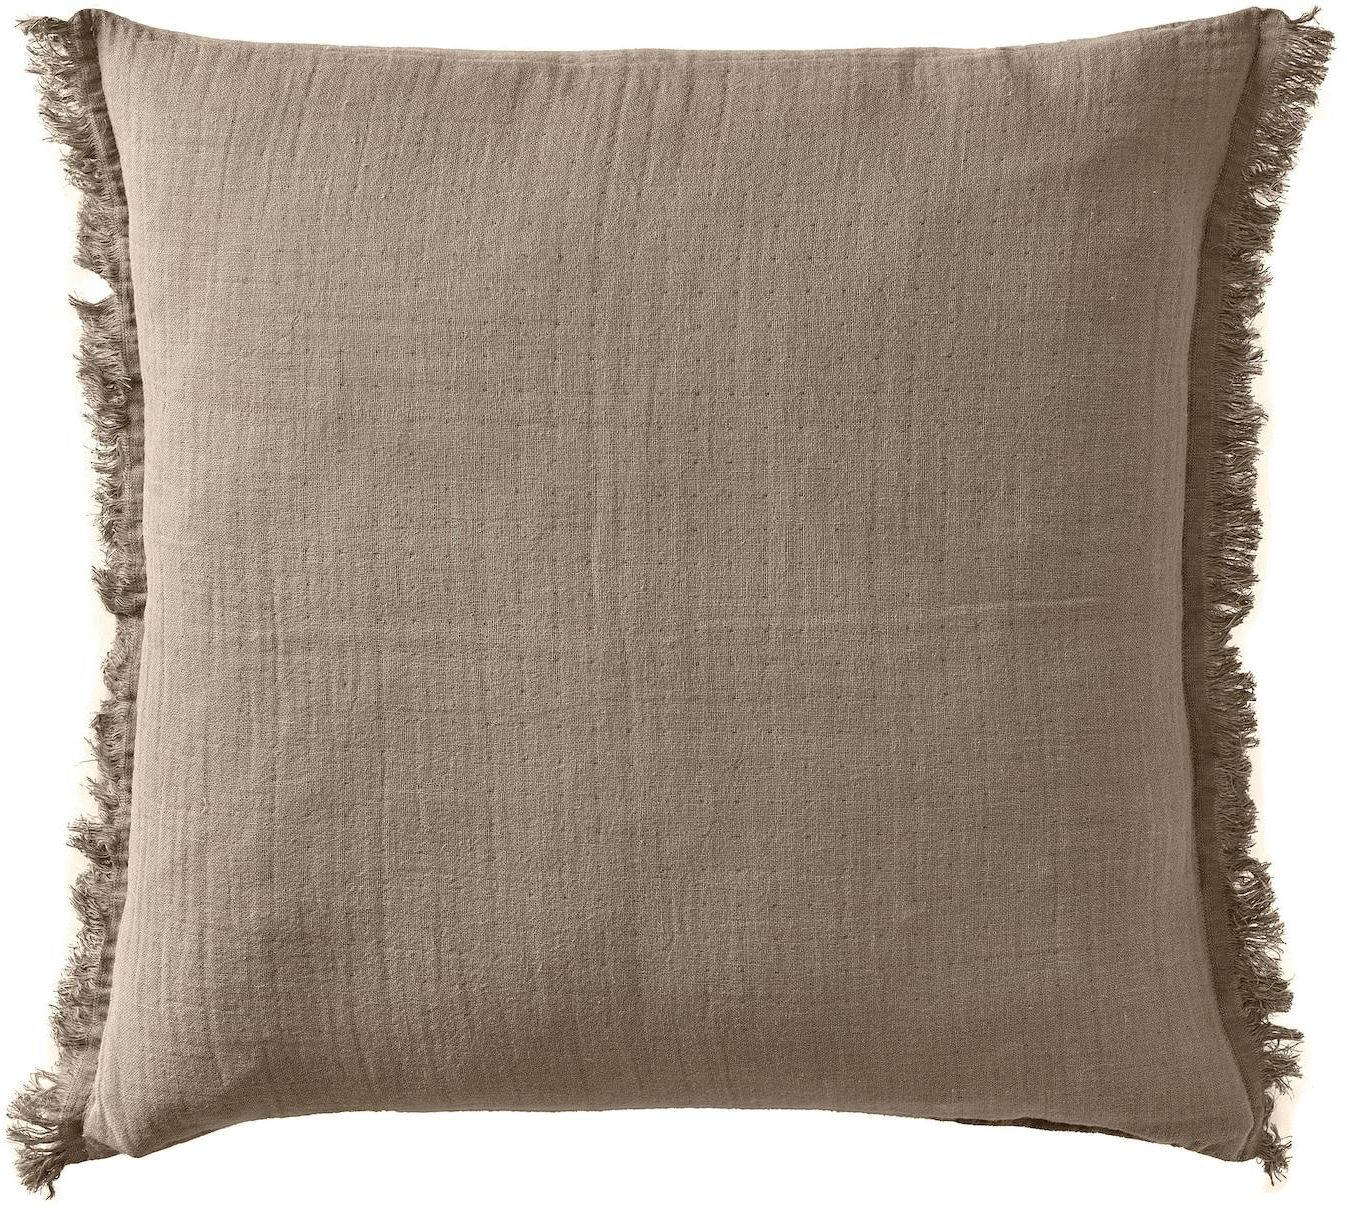 VALLKRASSING Cushion cover - light grey-brown 50x50 cm